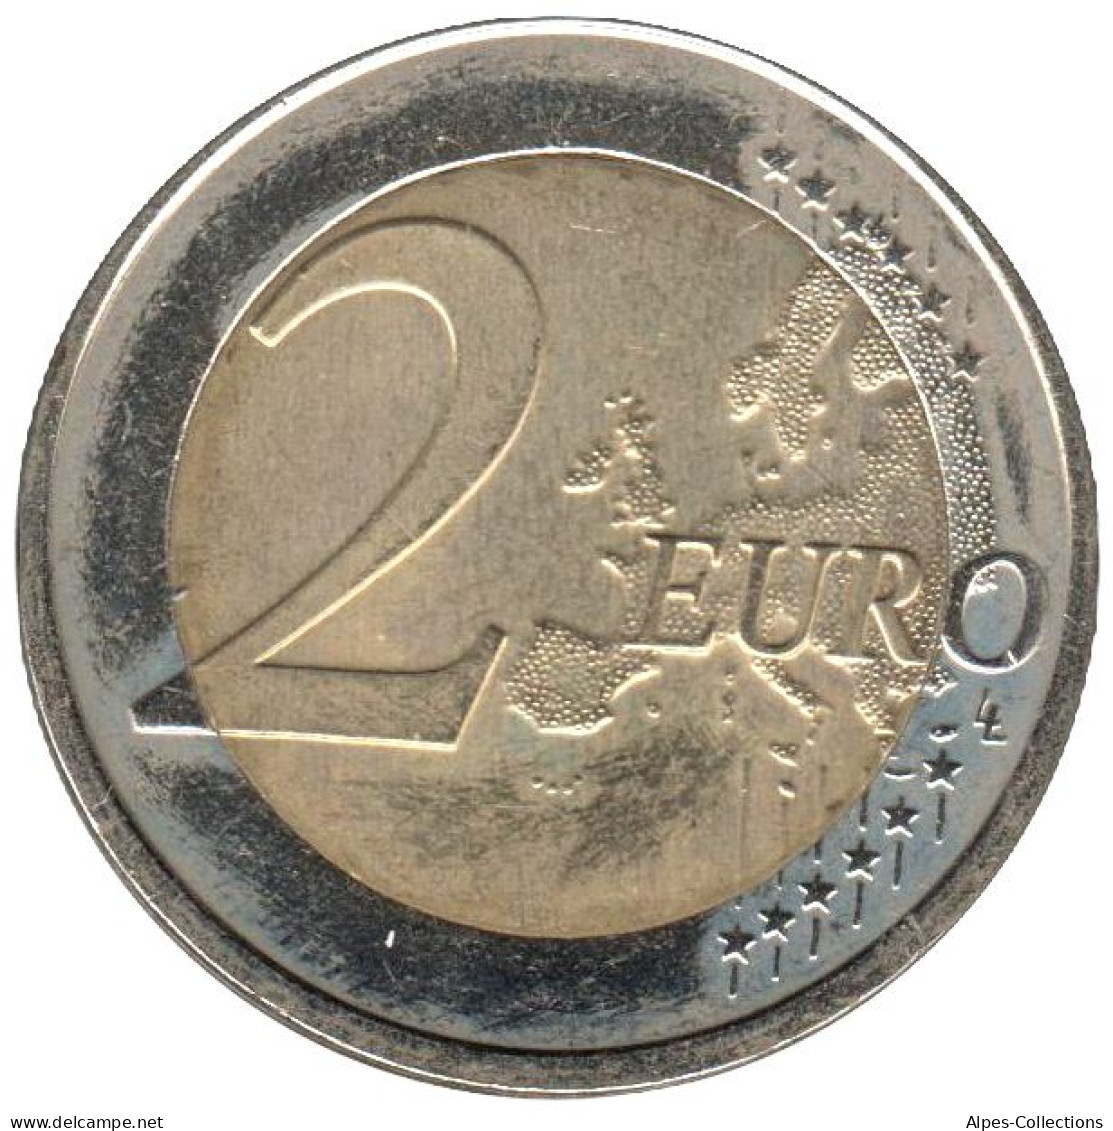 SQ20015.1 - SLOVAQUIE - 2 Euros Commémo. 30 Ans Du Drapeau Européen - 2015 - Slovakia